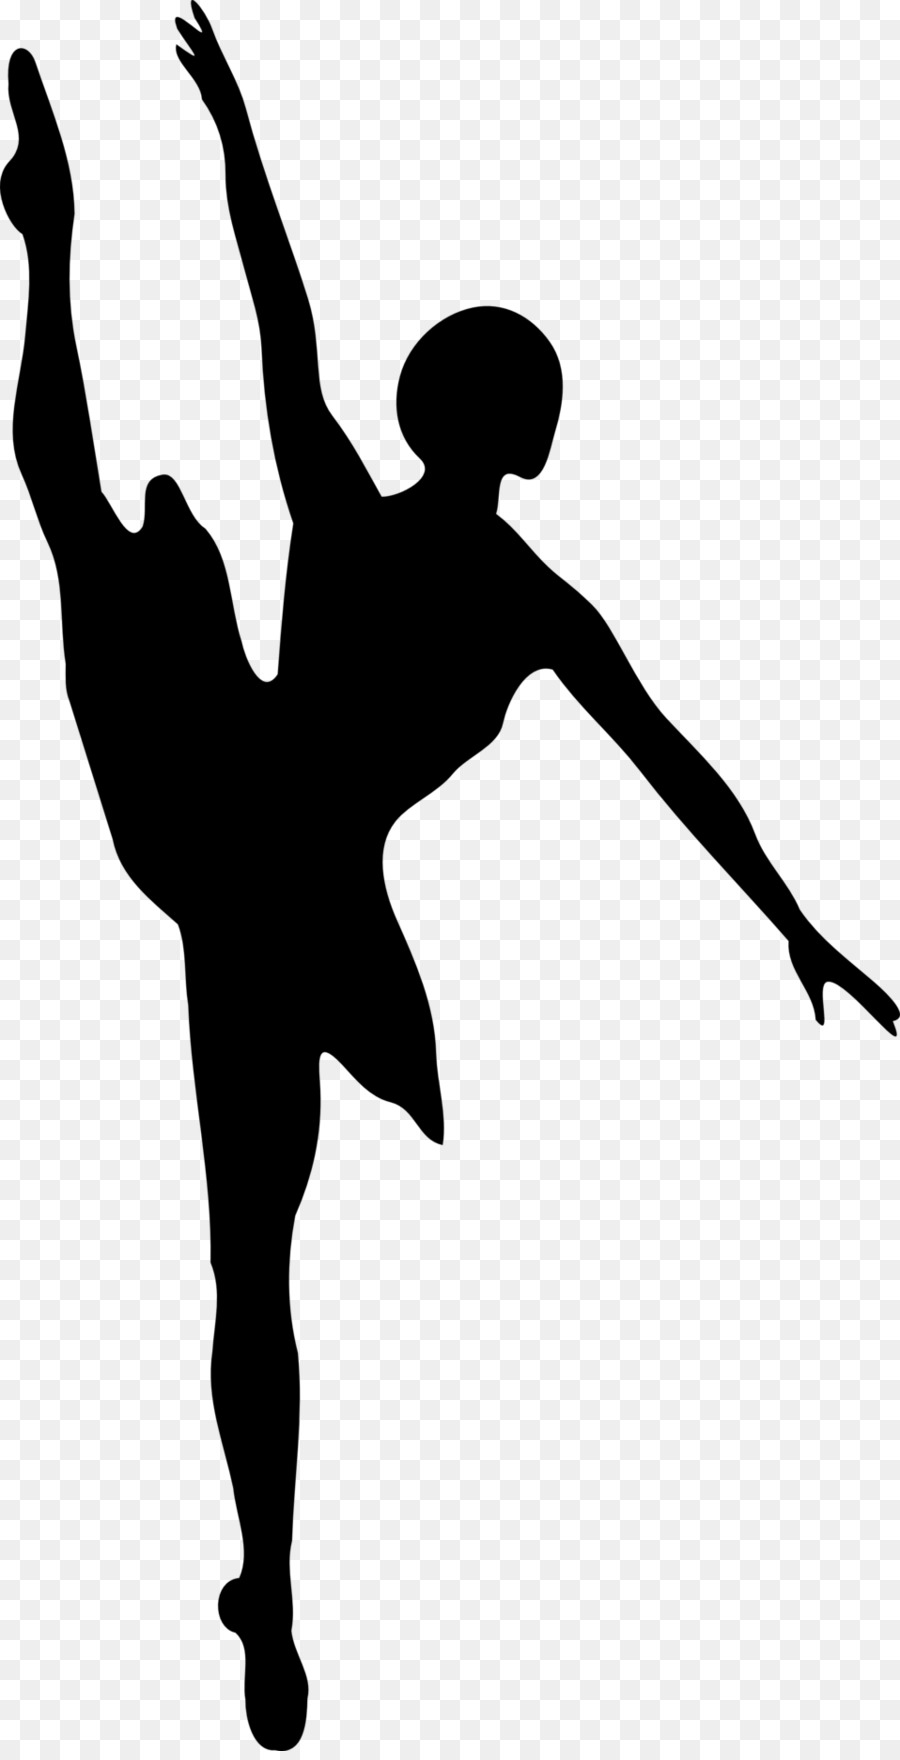 Ballet Dancer Clip art - dance vector png download - 958*1864 - Free Transparent Dance png Download.